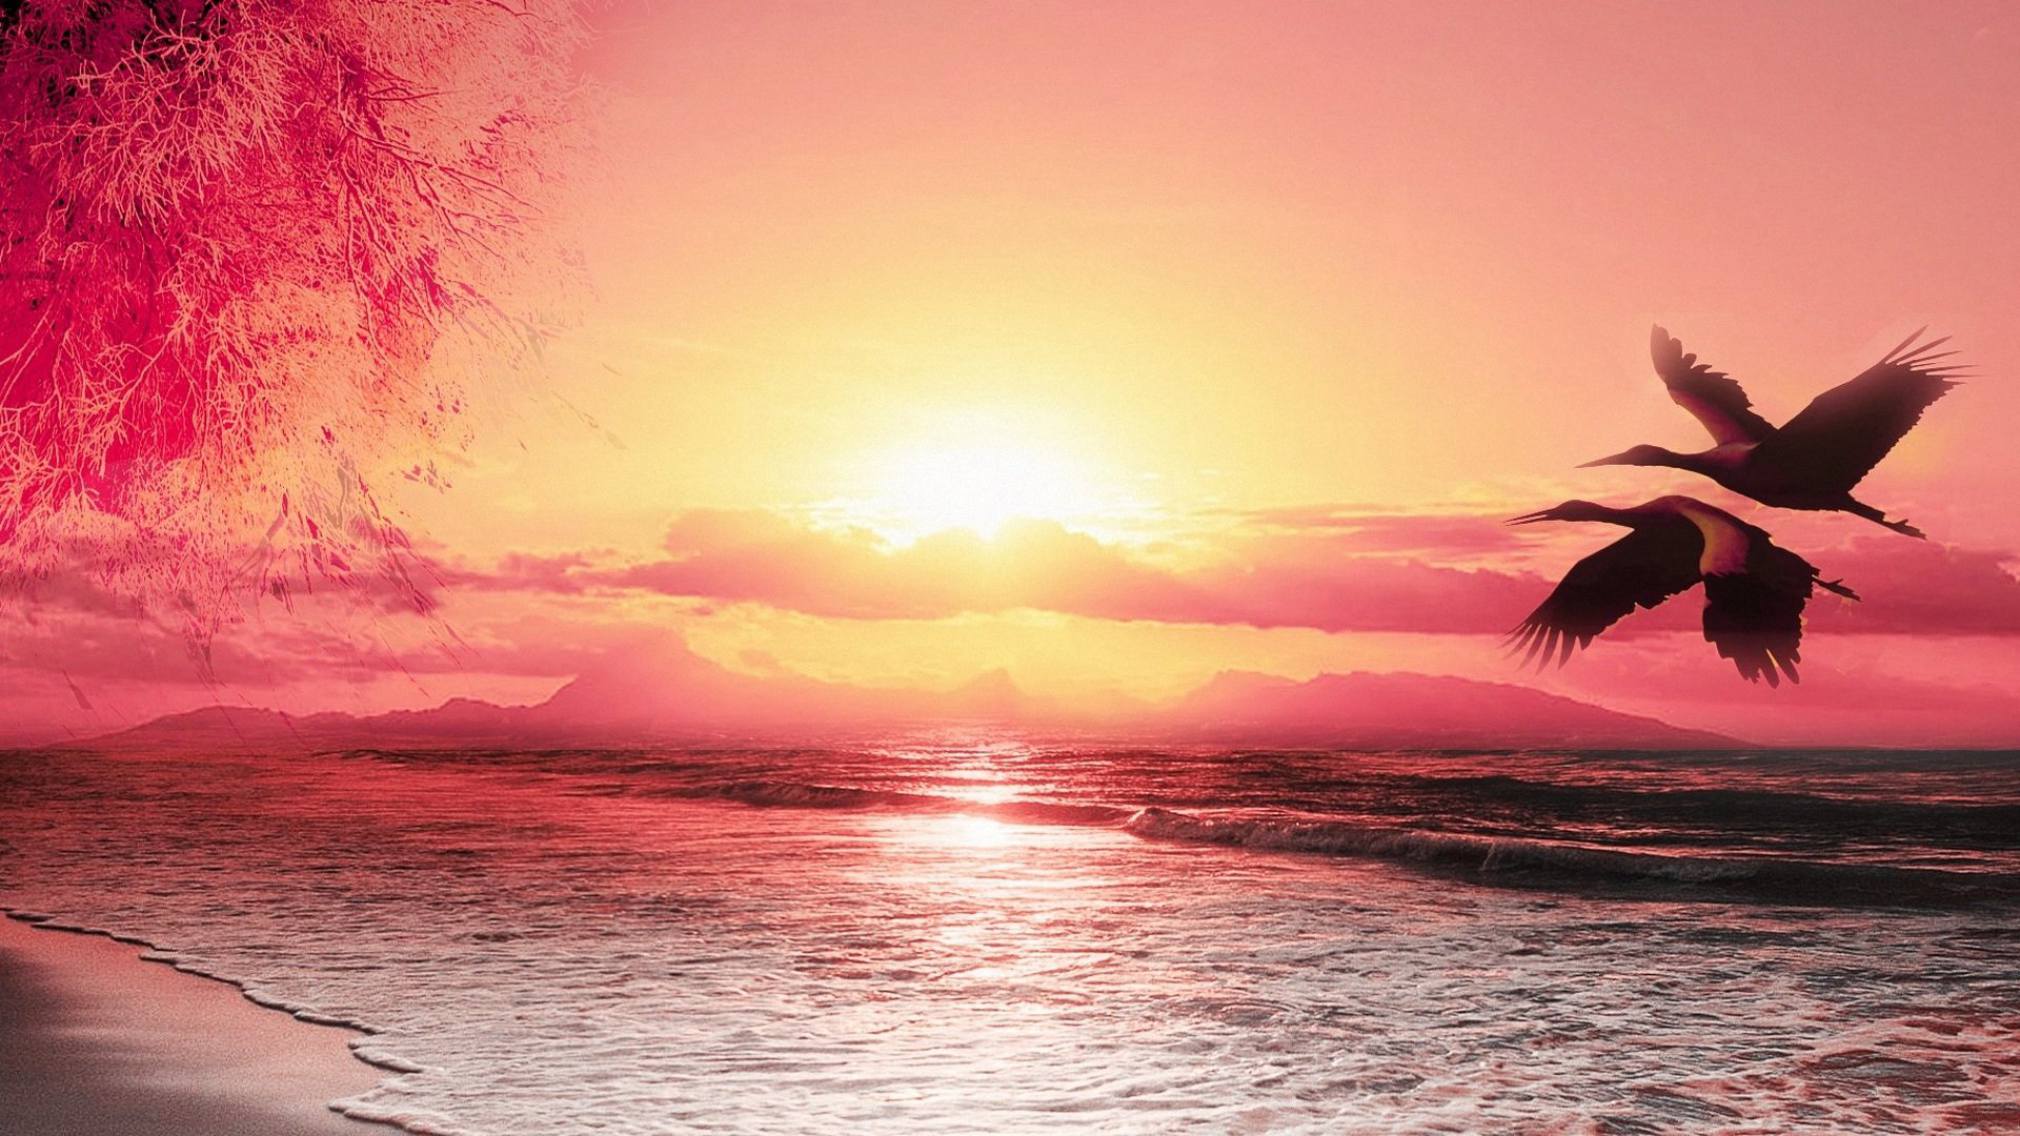 Beautiful Seabirds Beach Sunset Scenery Wallpaper Material